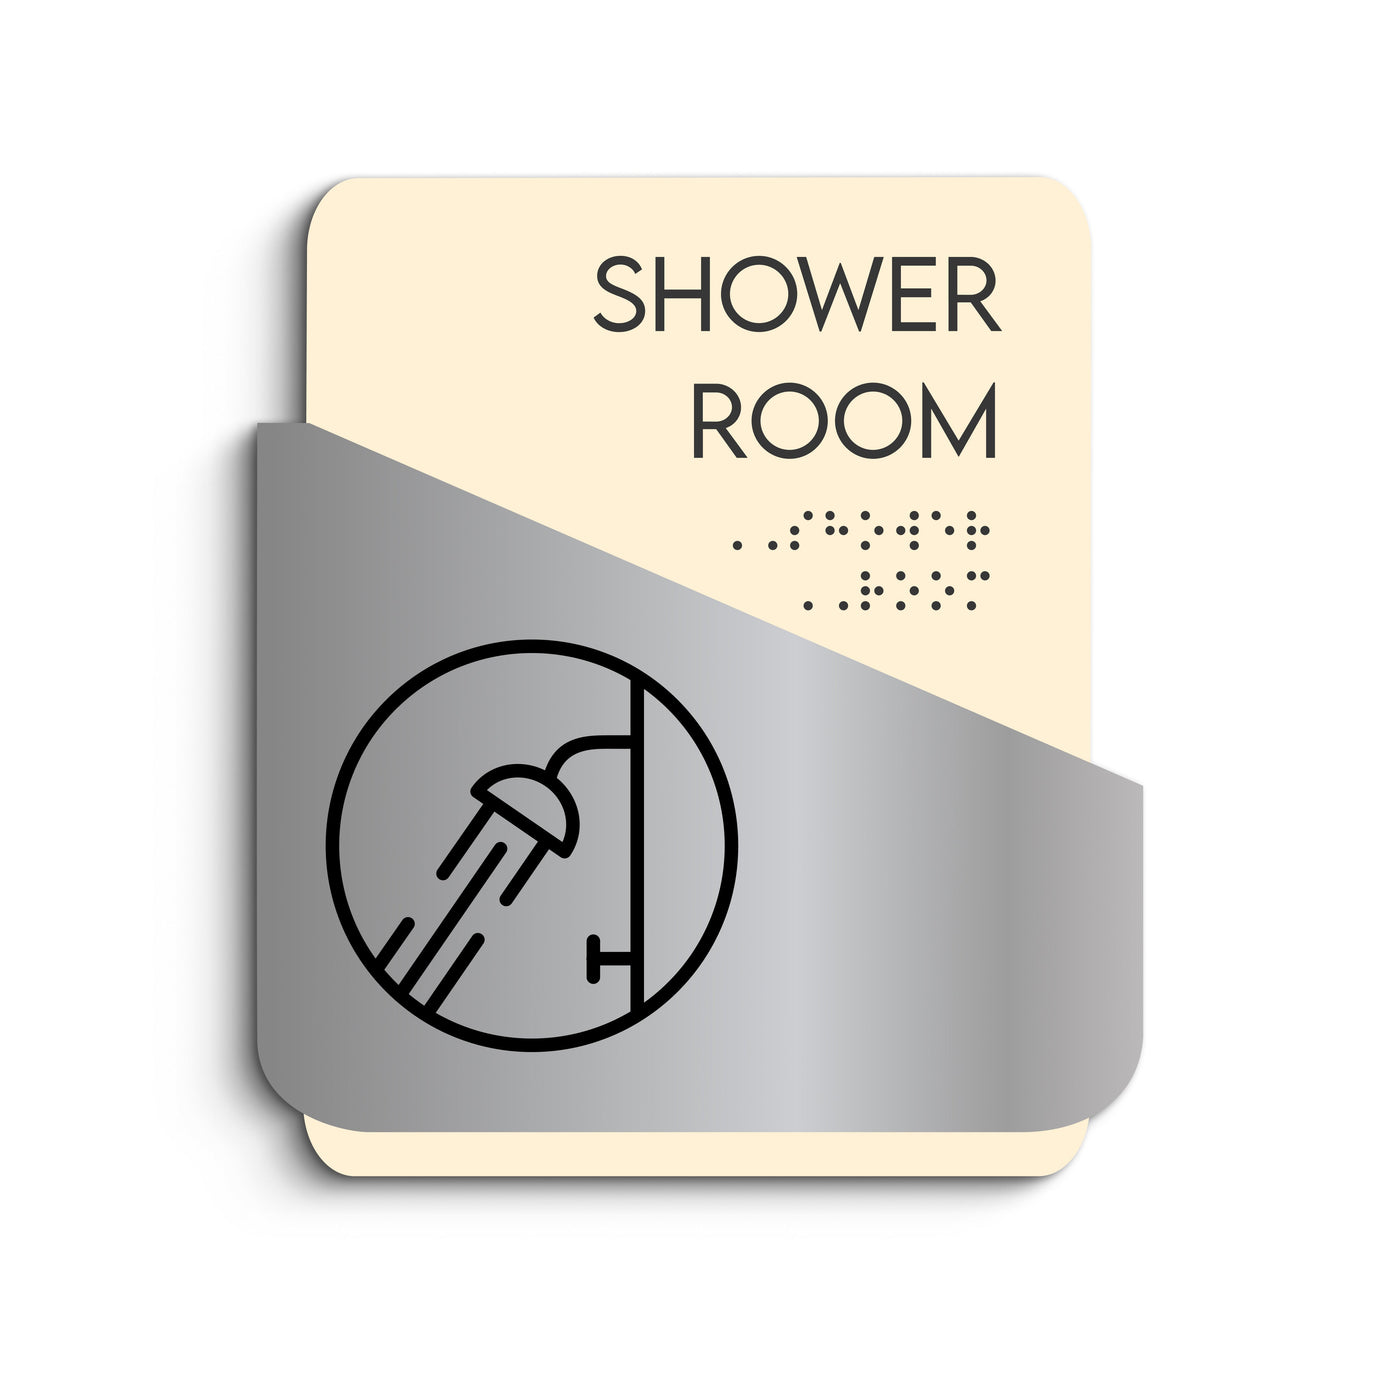 Information Signs - Steel Shower Signage "Downhill" Design